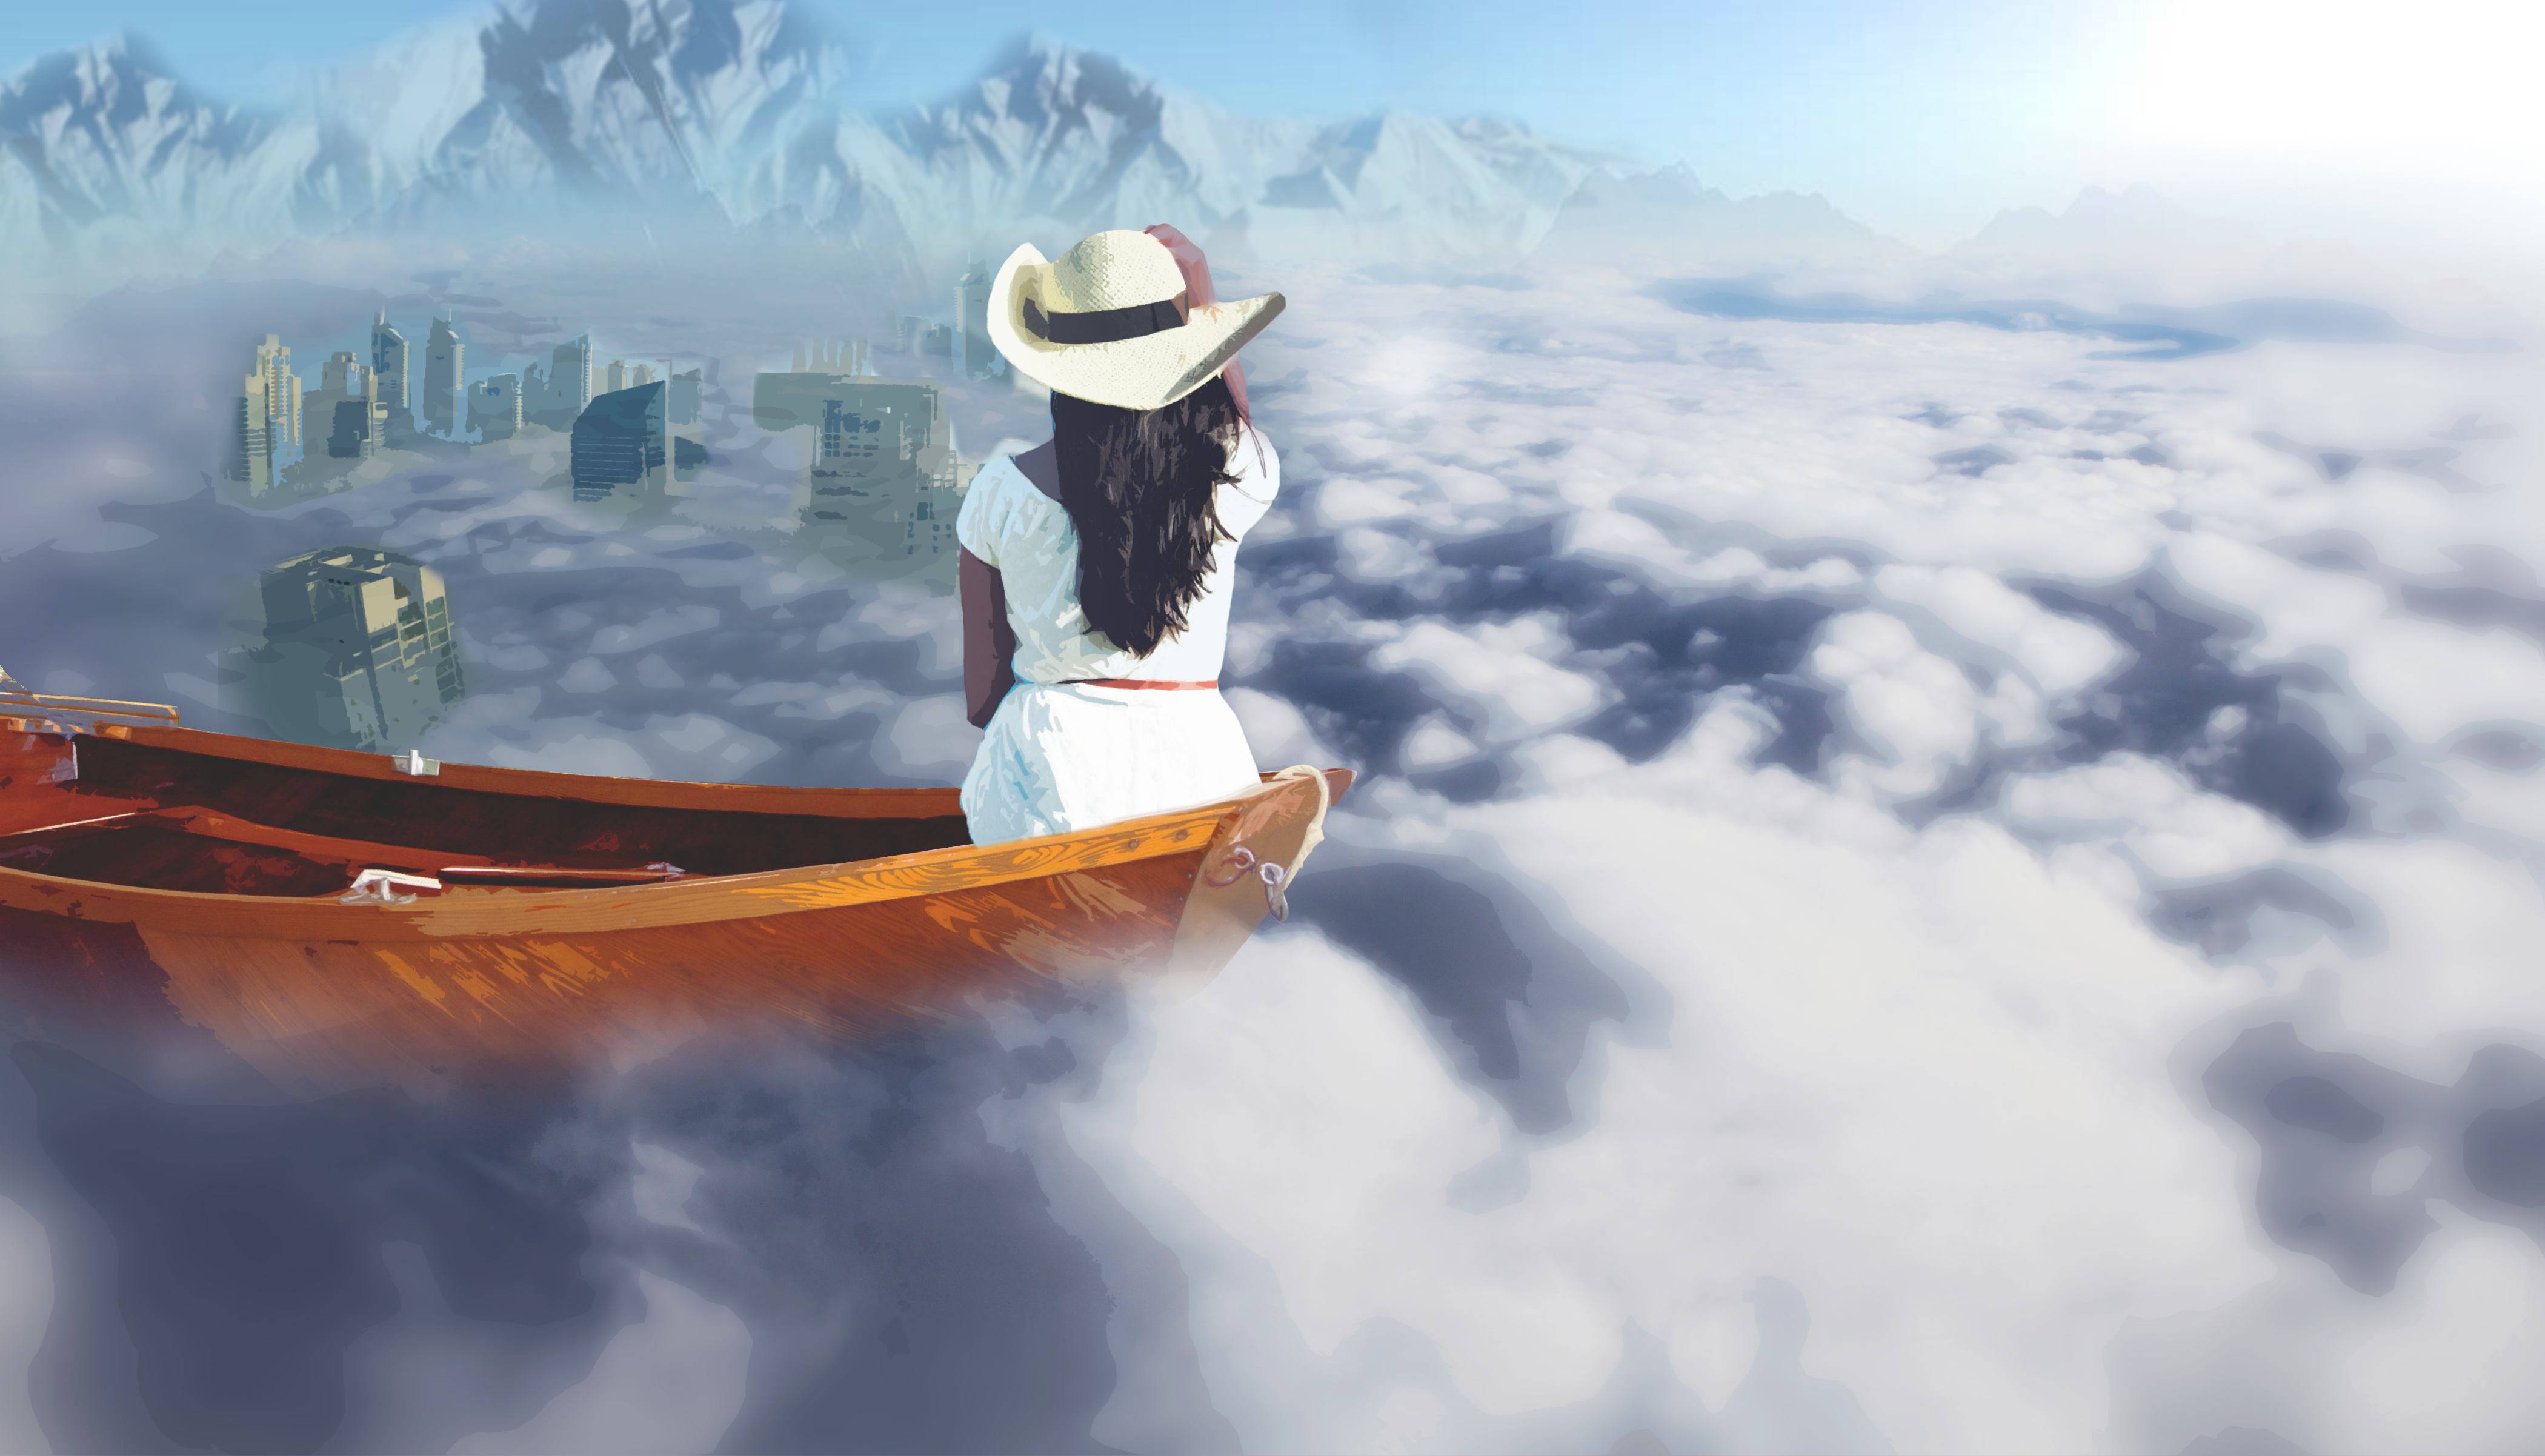 General 4200x2403 concept art digital art clouds boat women white dress mountains photoshopped